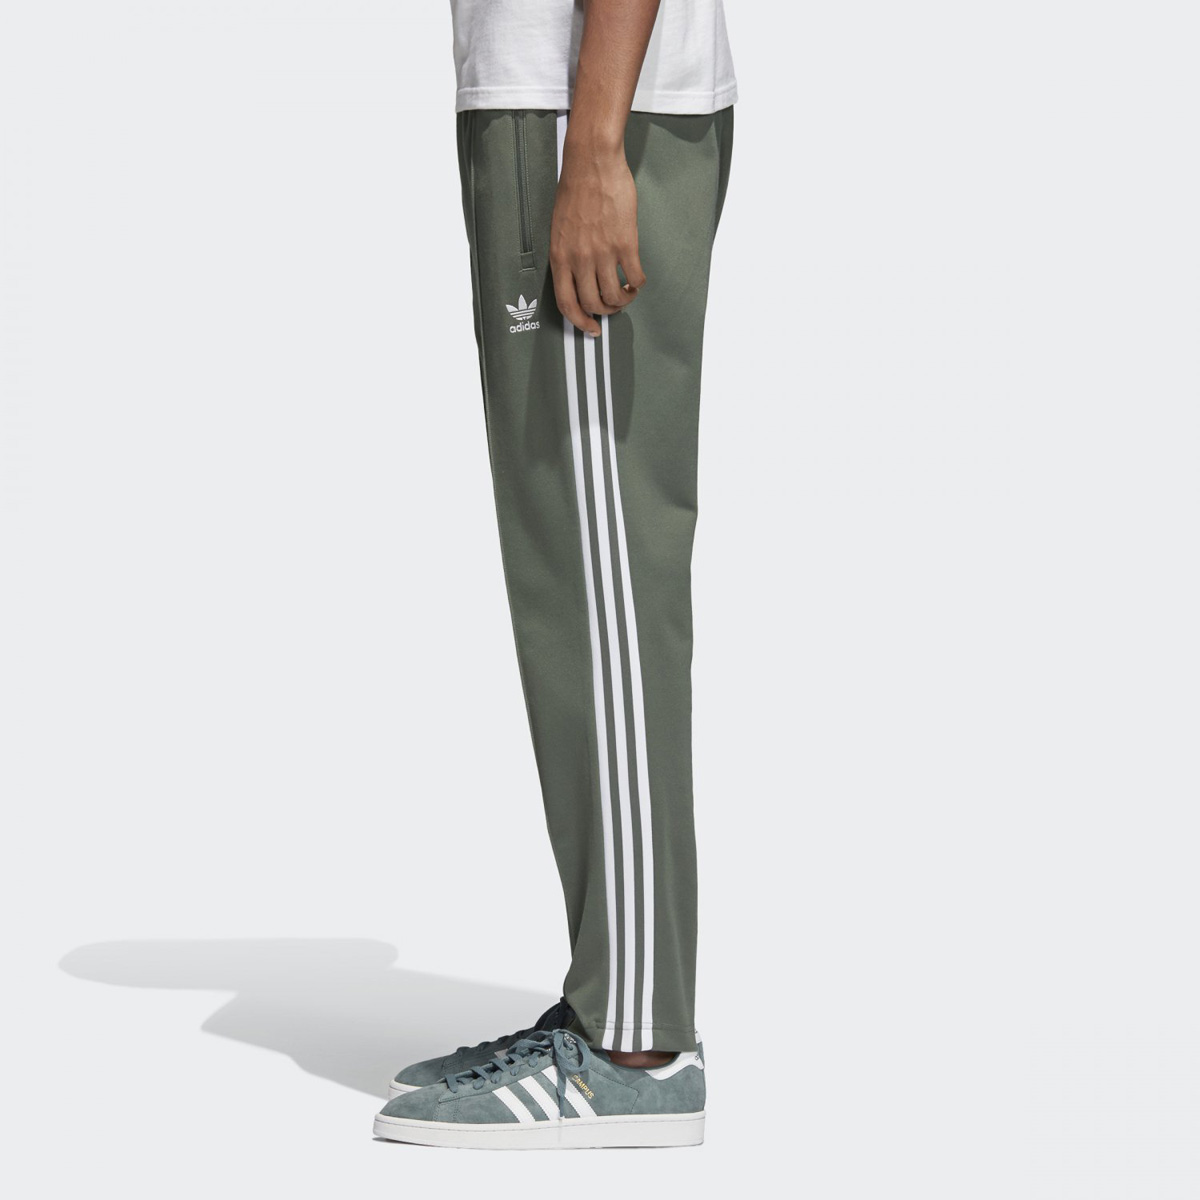 adidas beckenbauer track pants maroon